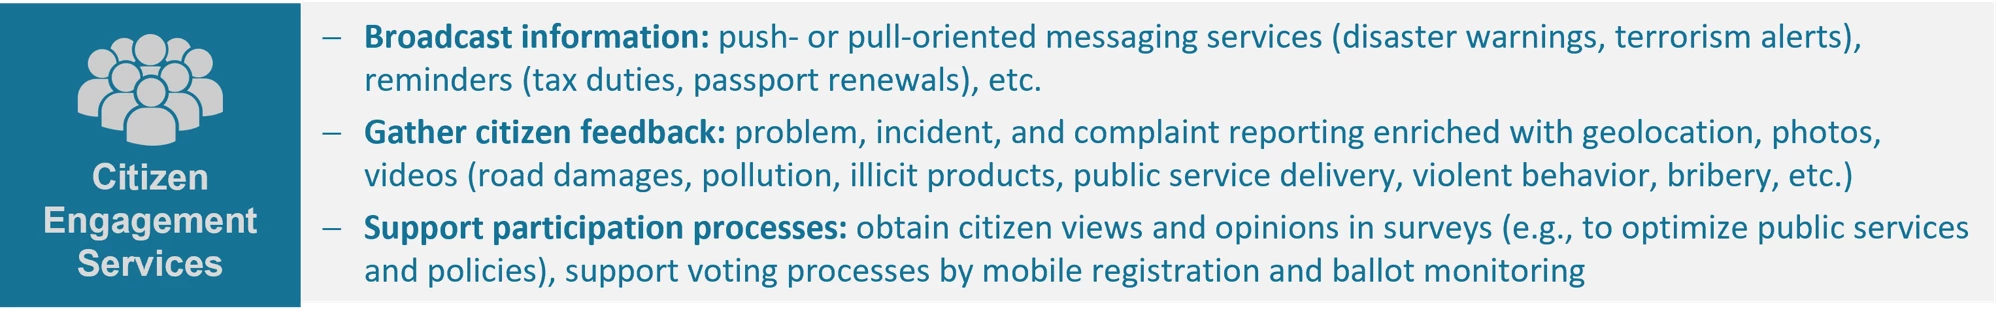 Mobile government, Citizen Engagement services 